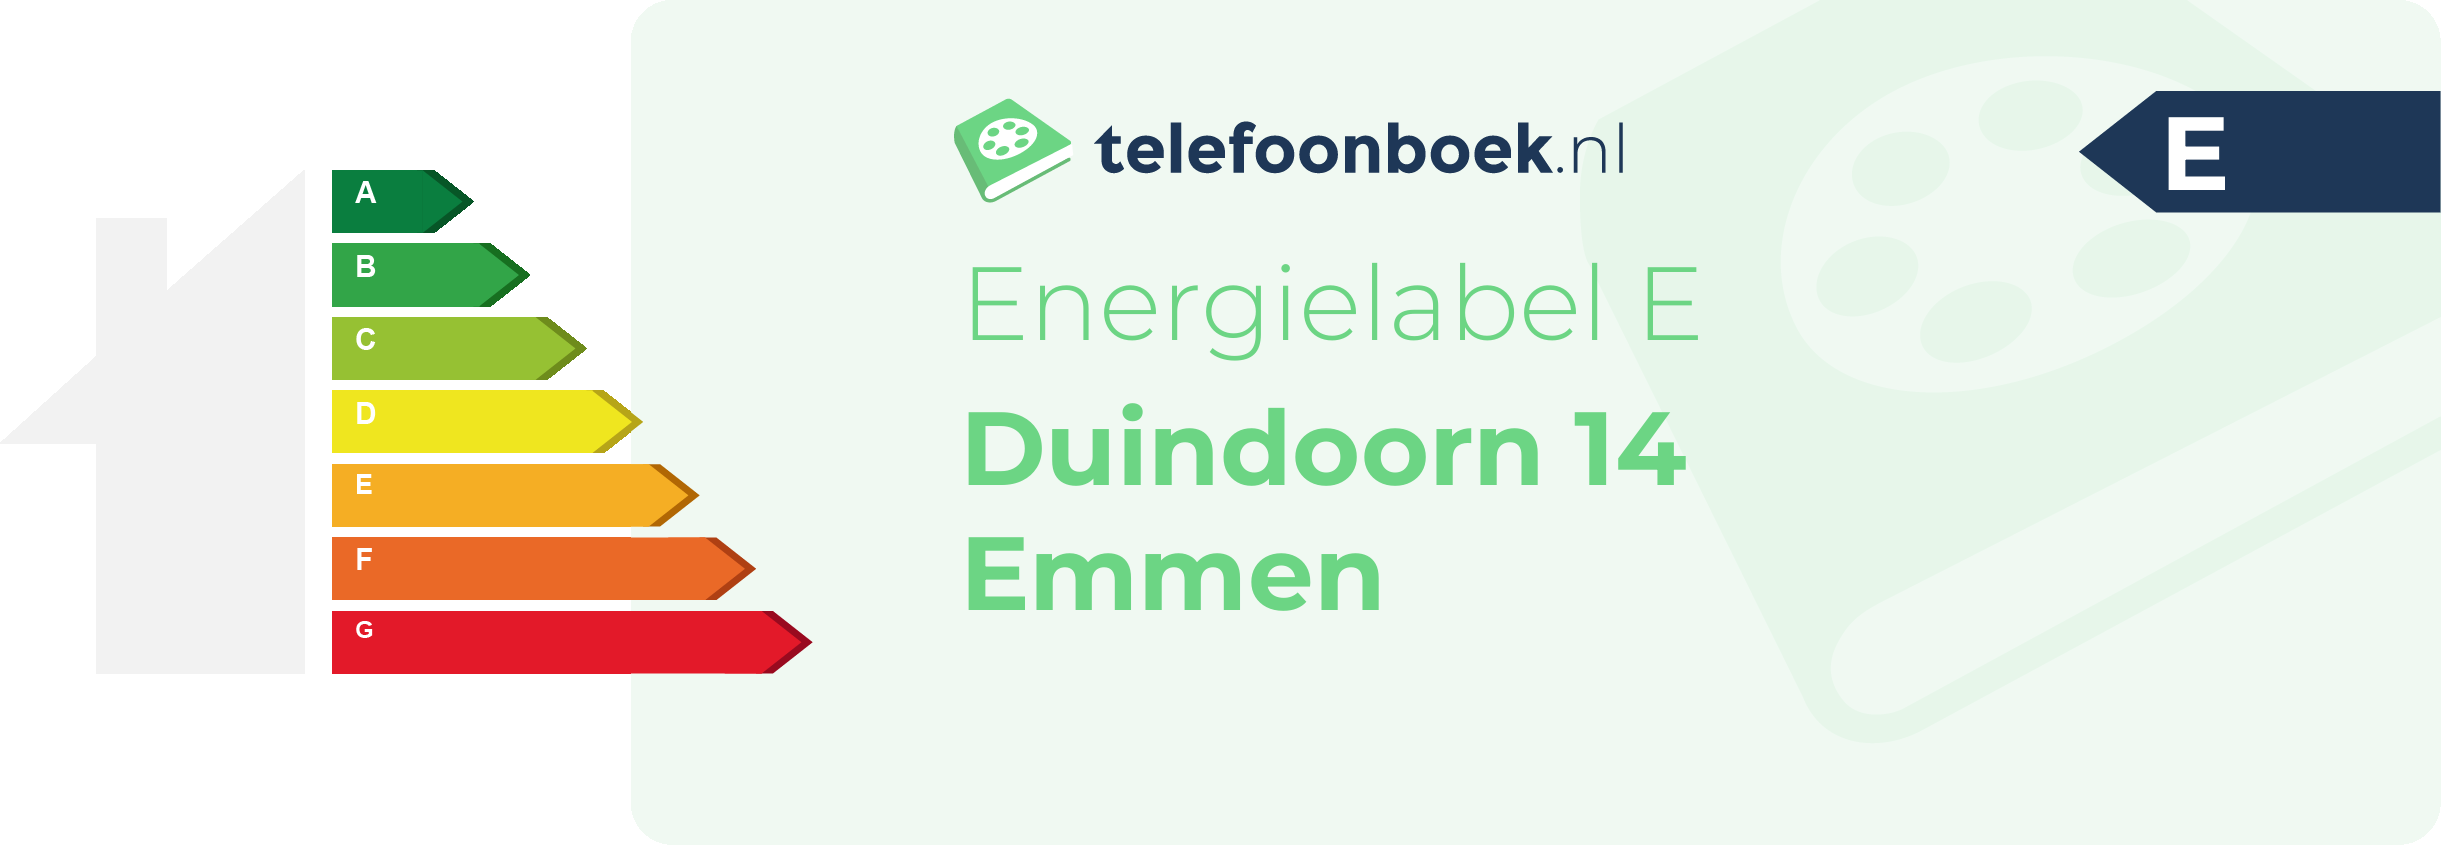 Energielabel Duindoorn 14 Emmen